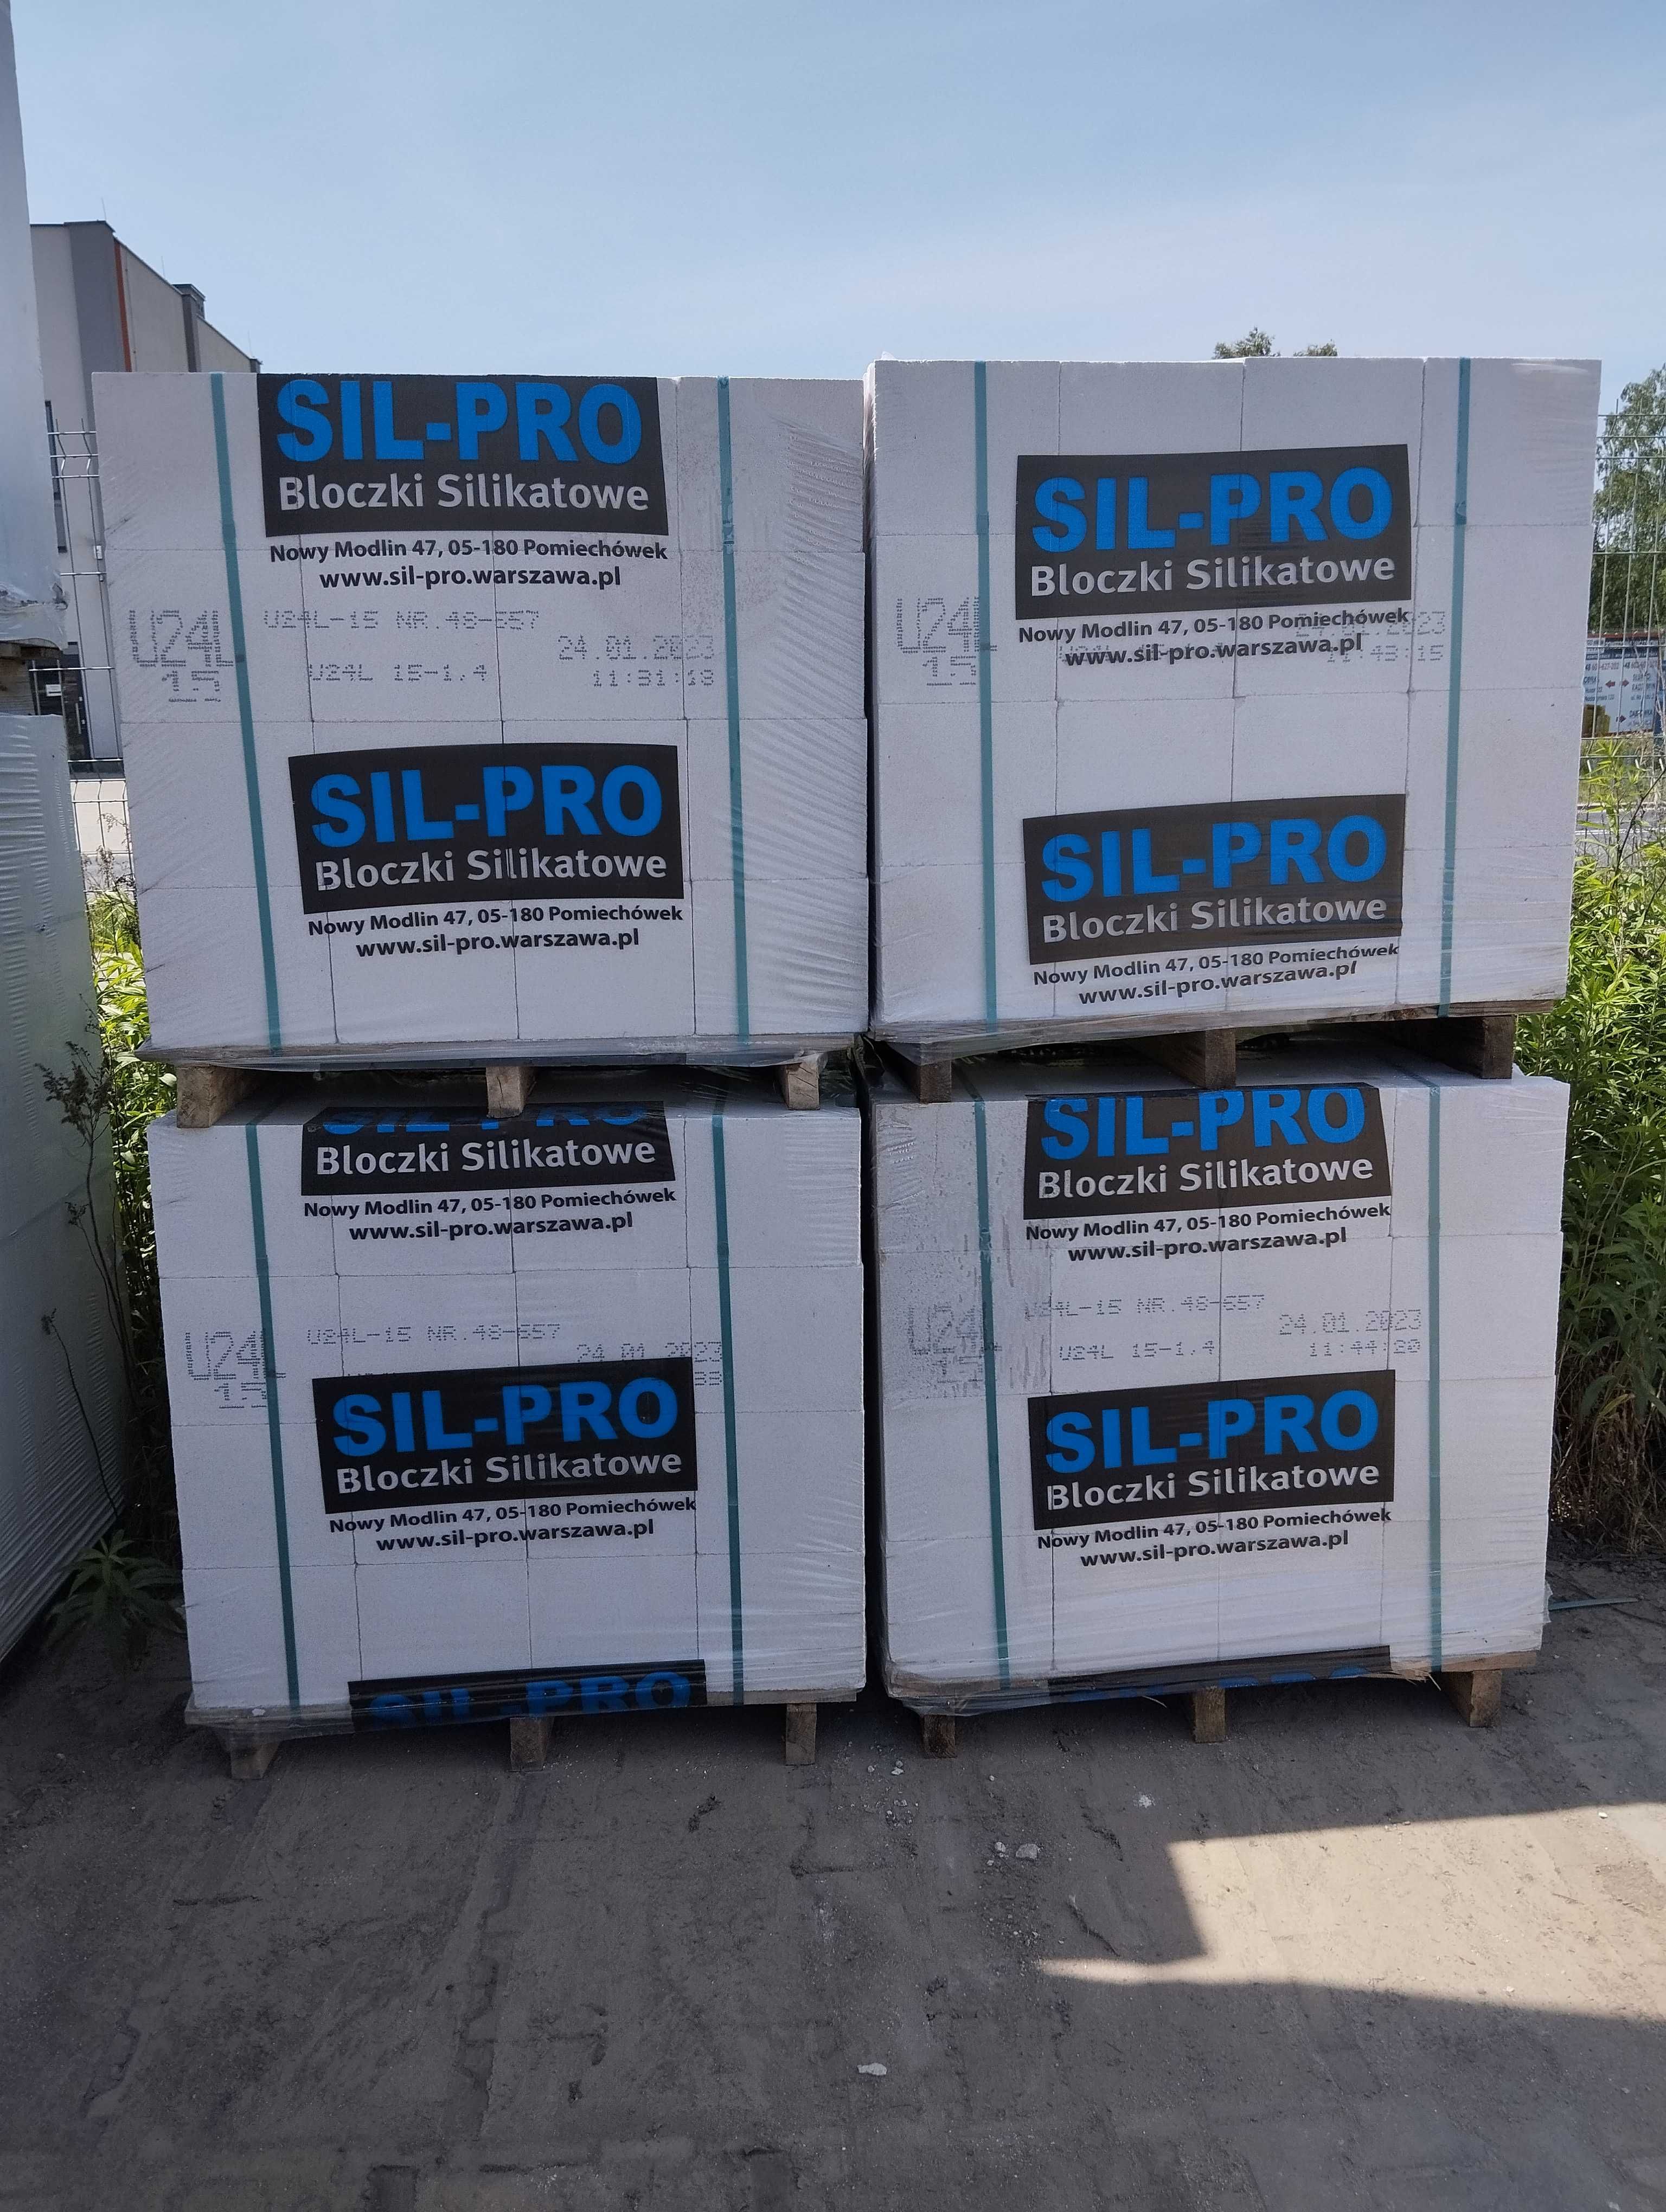 SILPRO Bloczek silikatowy U12 kl 15 25x12x22